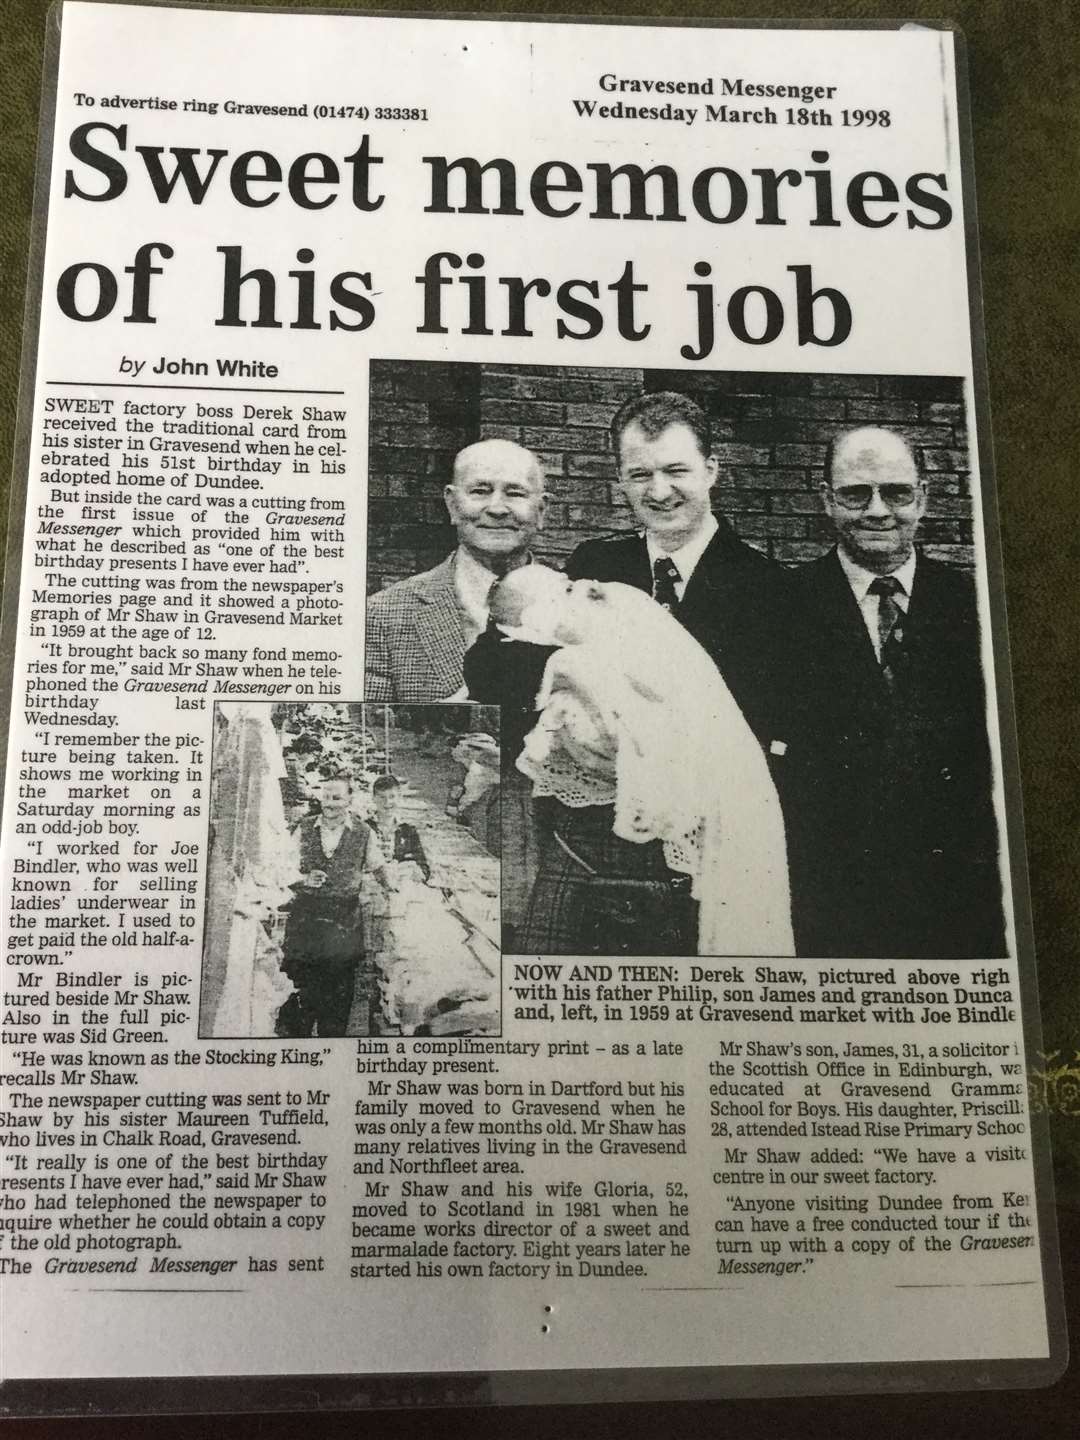 Derek reminisces on the market in a 1998 Gravesend Messenger article